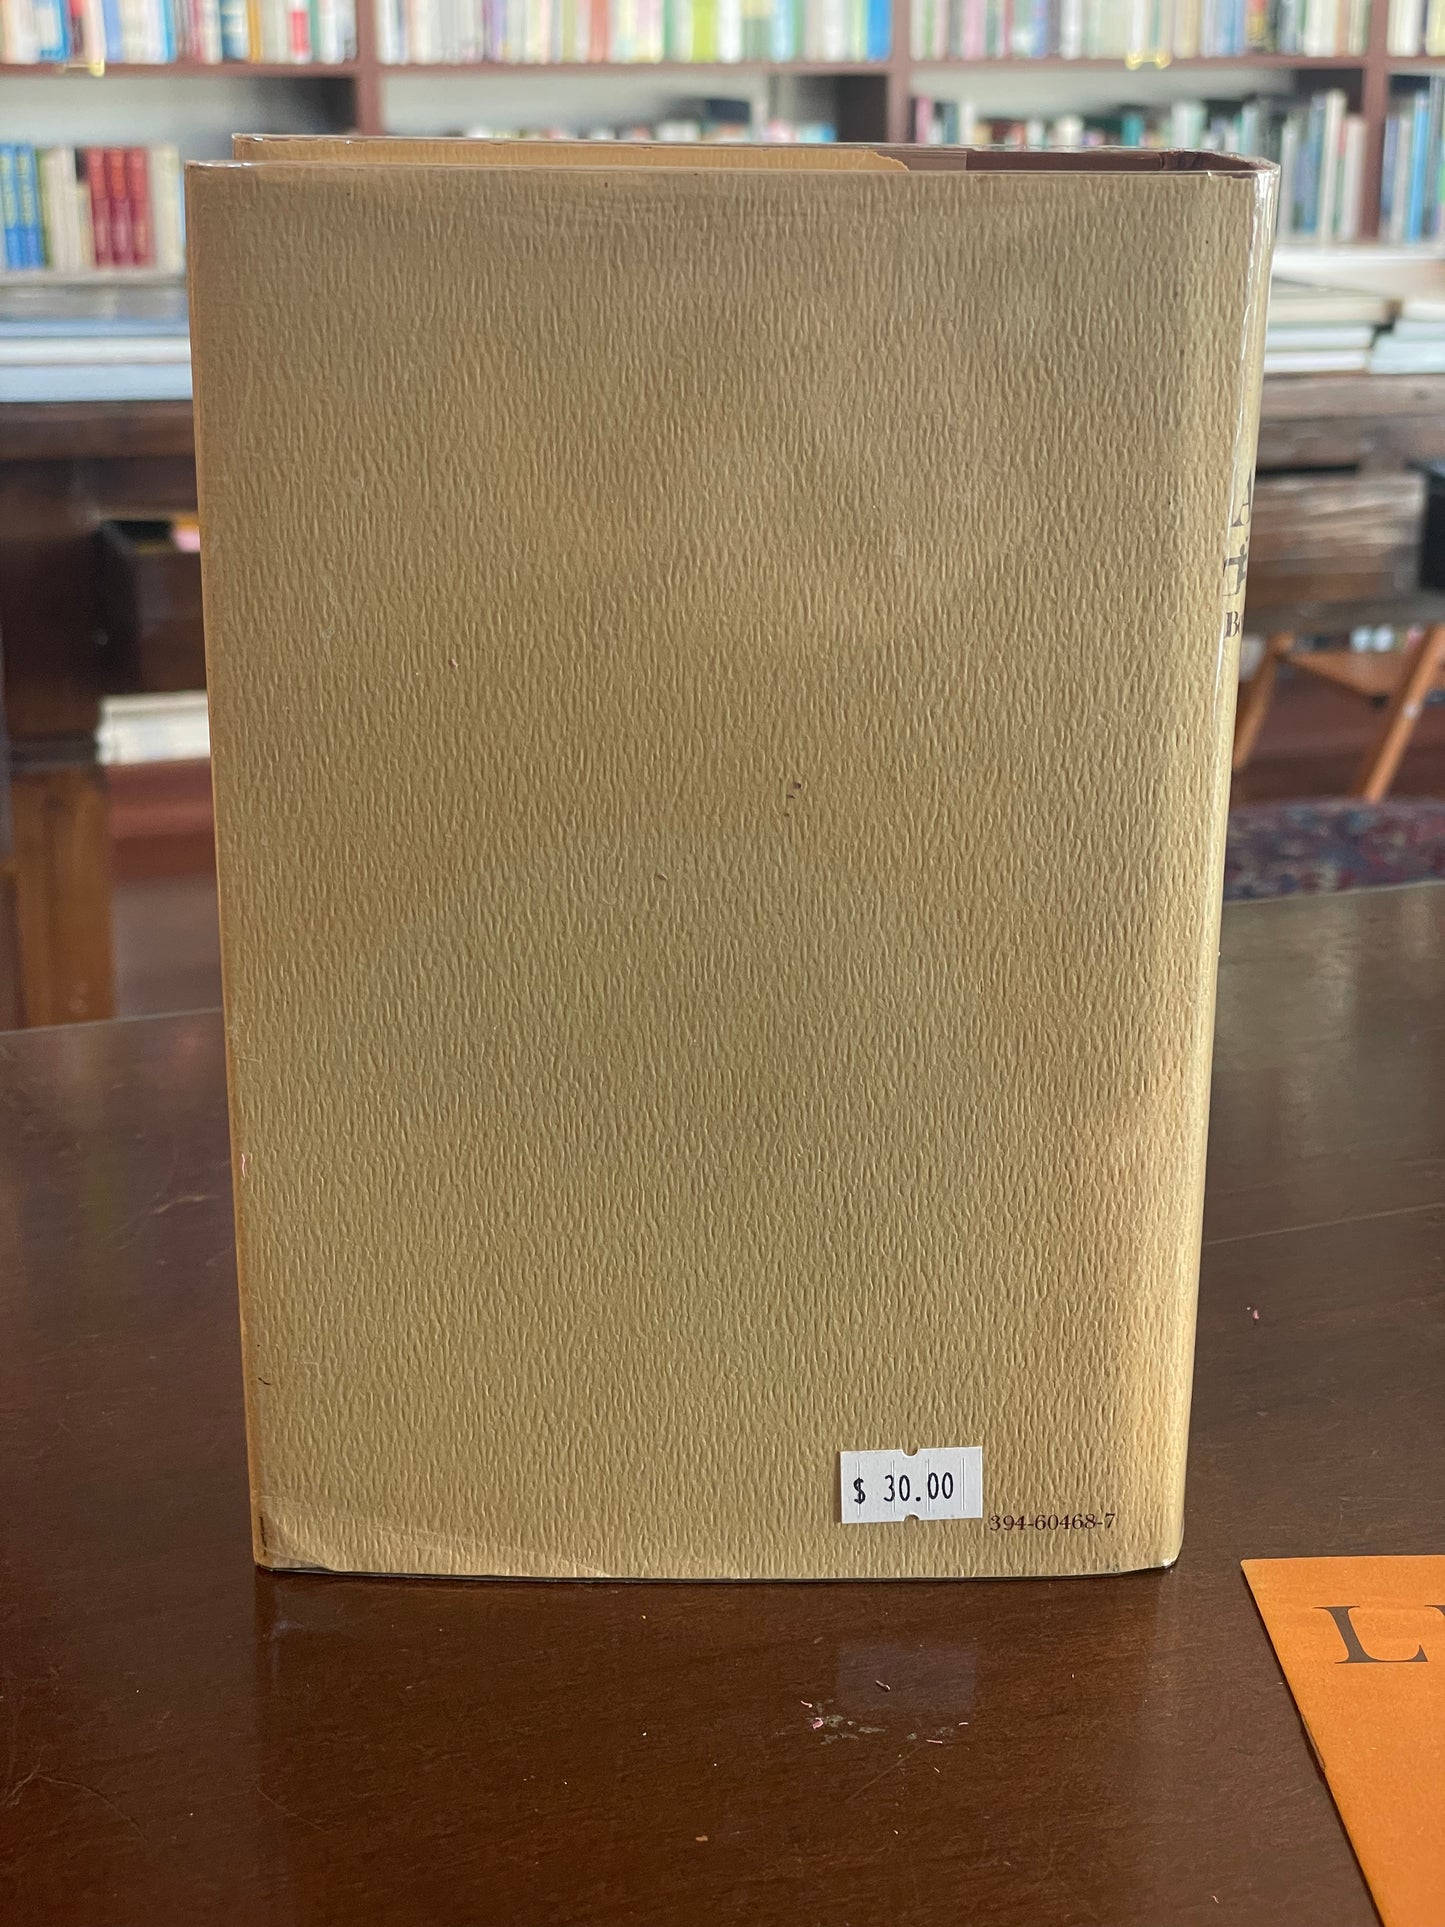 Abraham Lincoln by Benjamin P. Thomas (first edition, 1968)